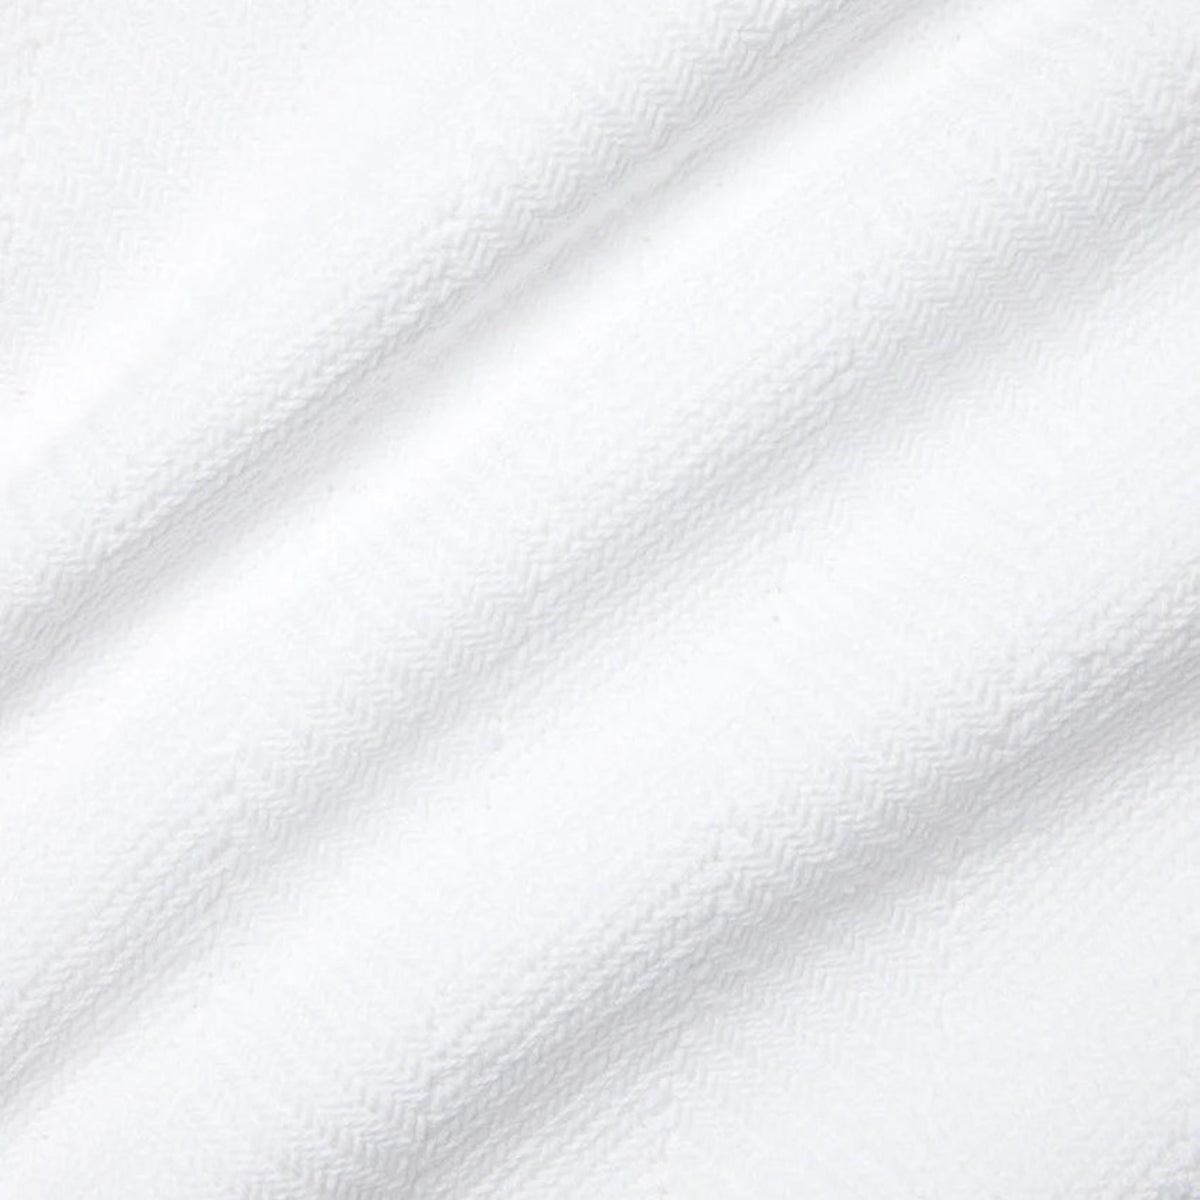 Swatch Sample of Sferra Camilo Blanket in White/White